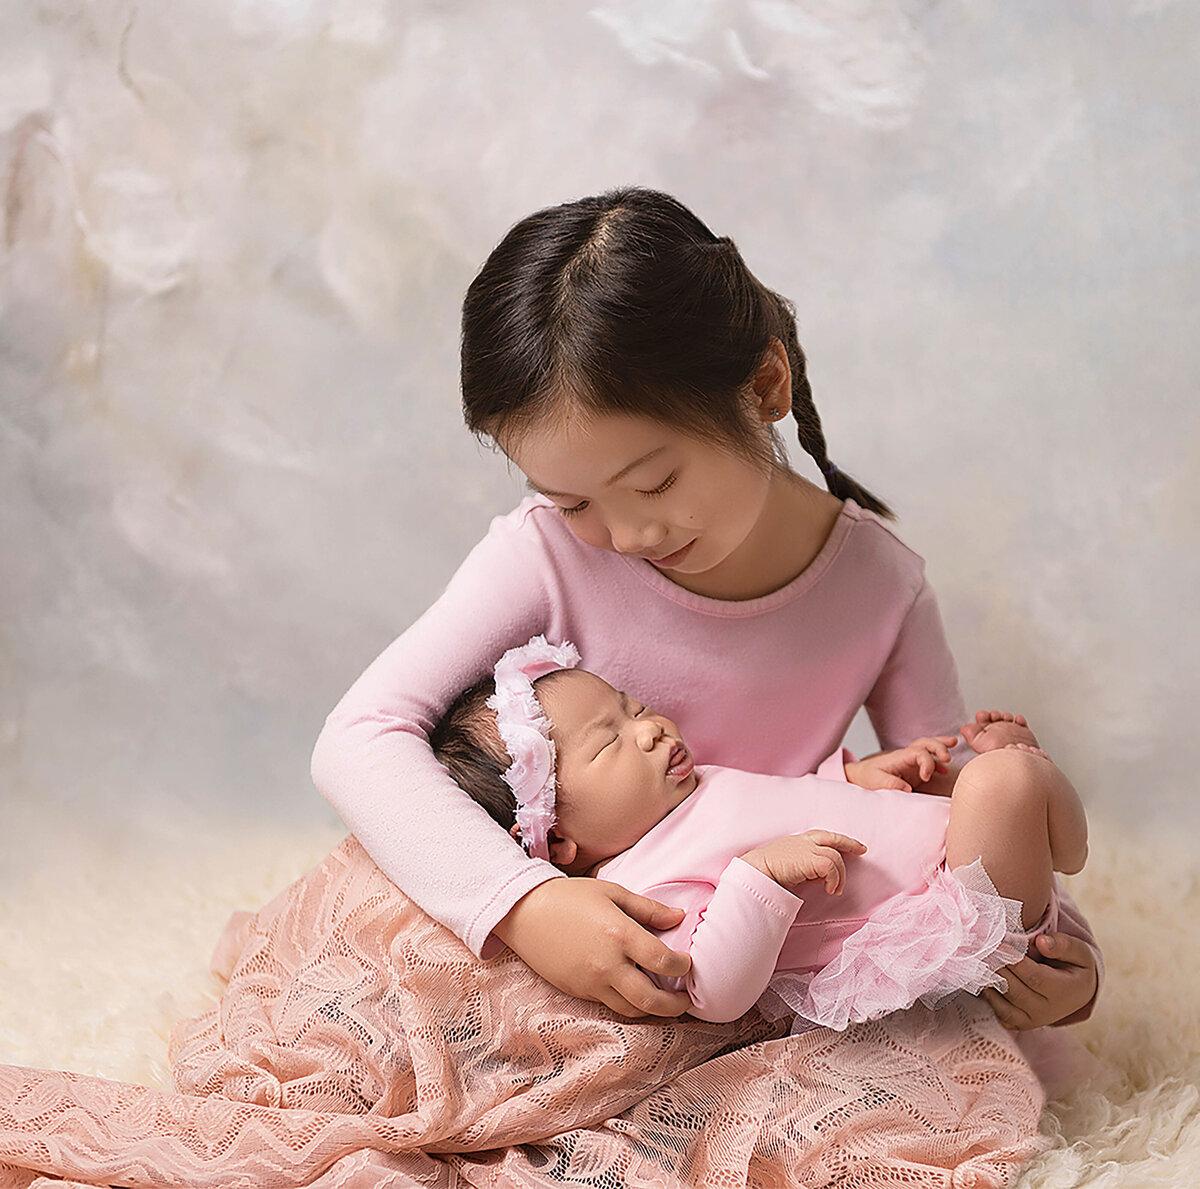 big sister gently holding newborn sister